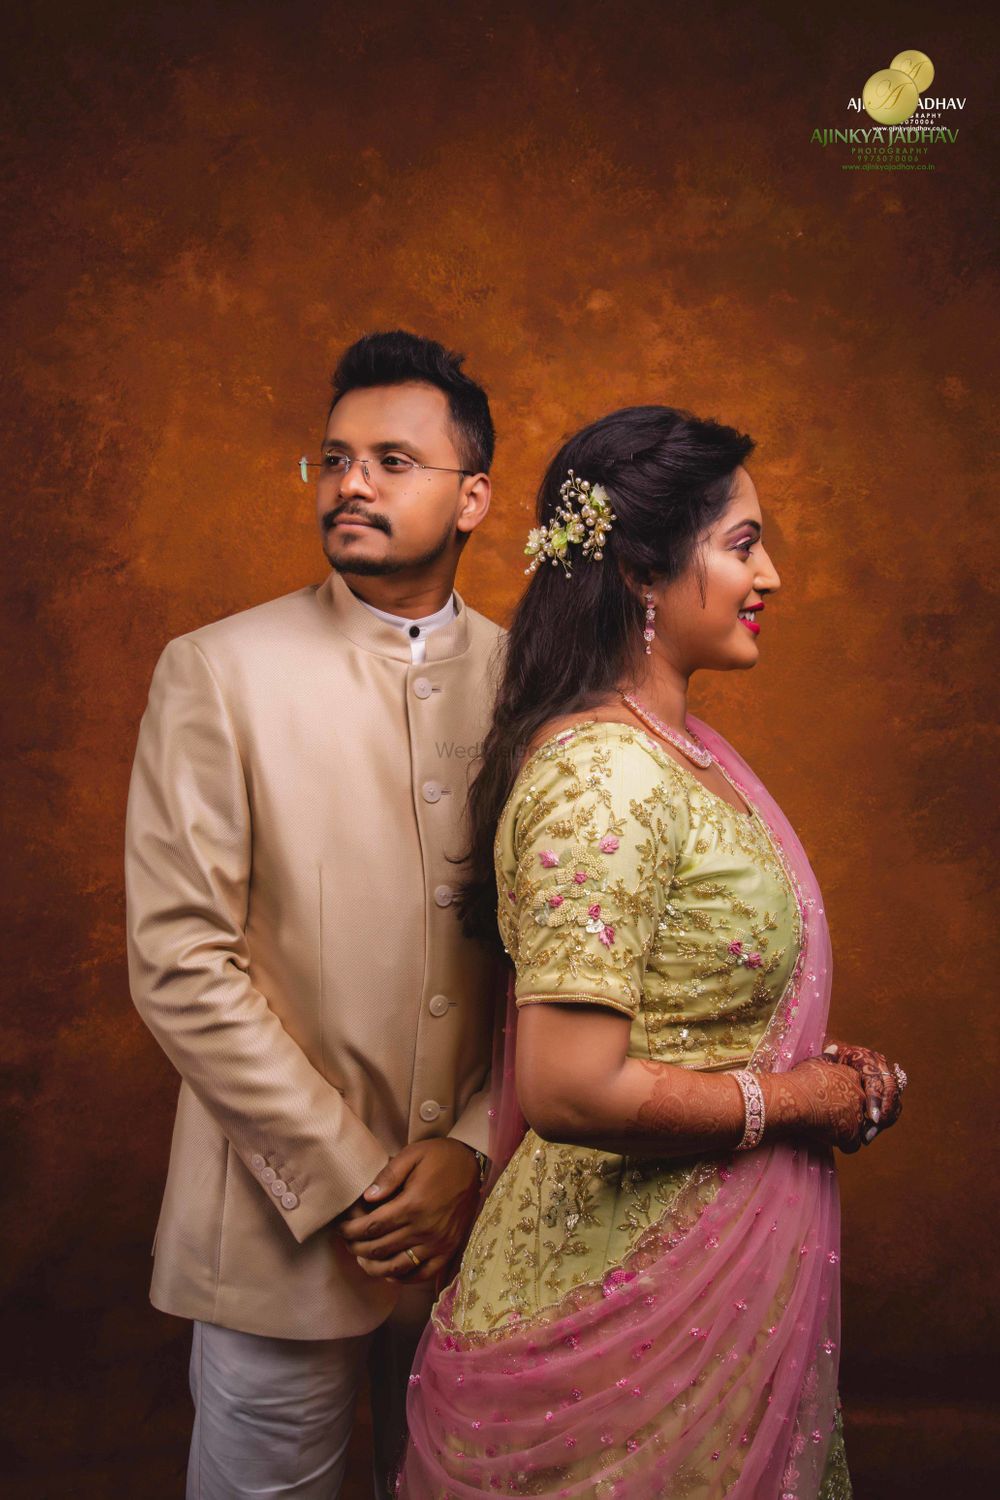 Photo From Elsi & Noel Wedding Portraits - By Ajinkya Jadhav Photography